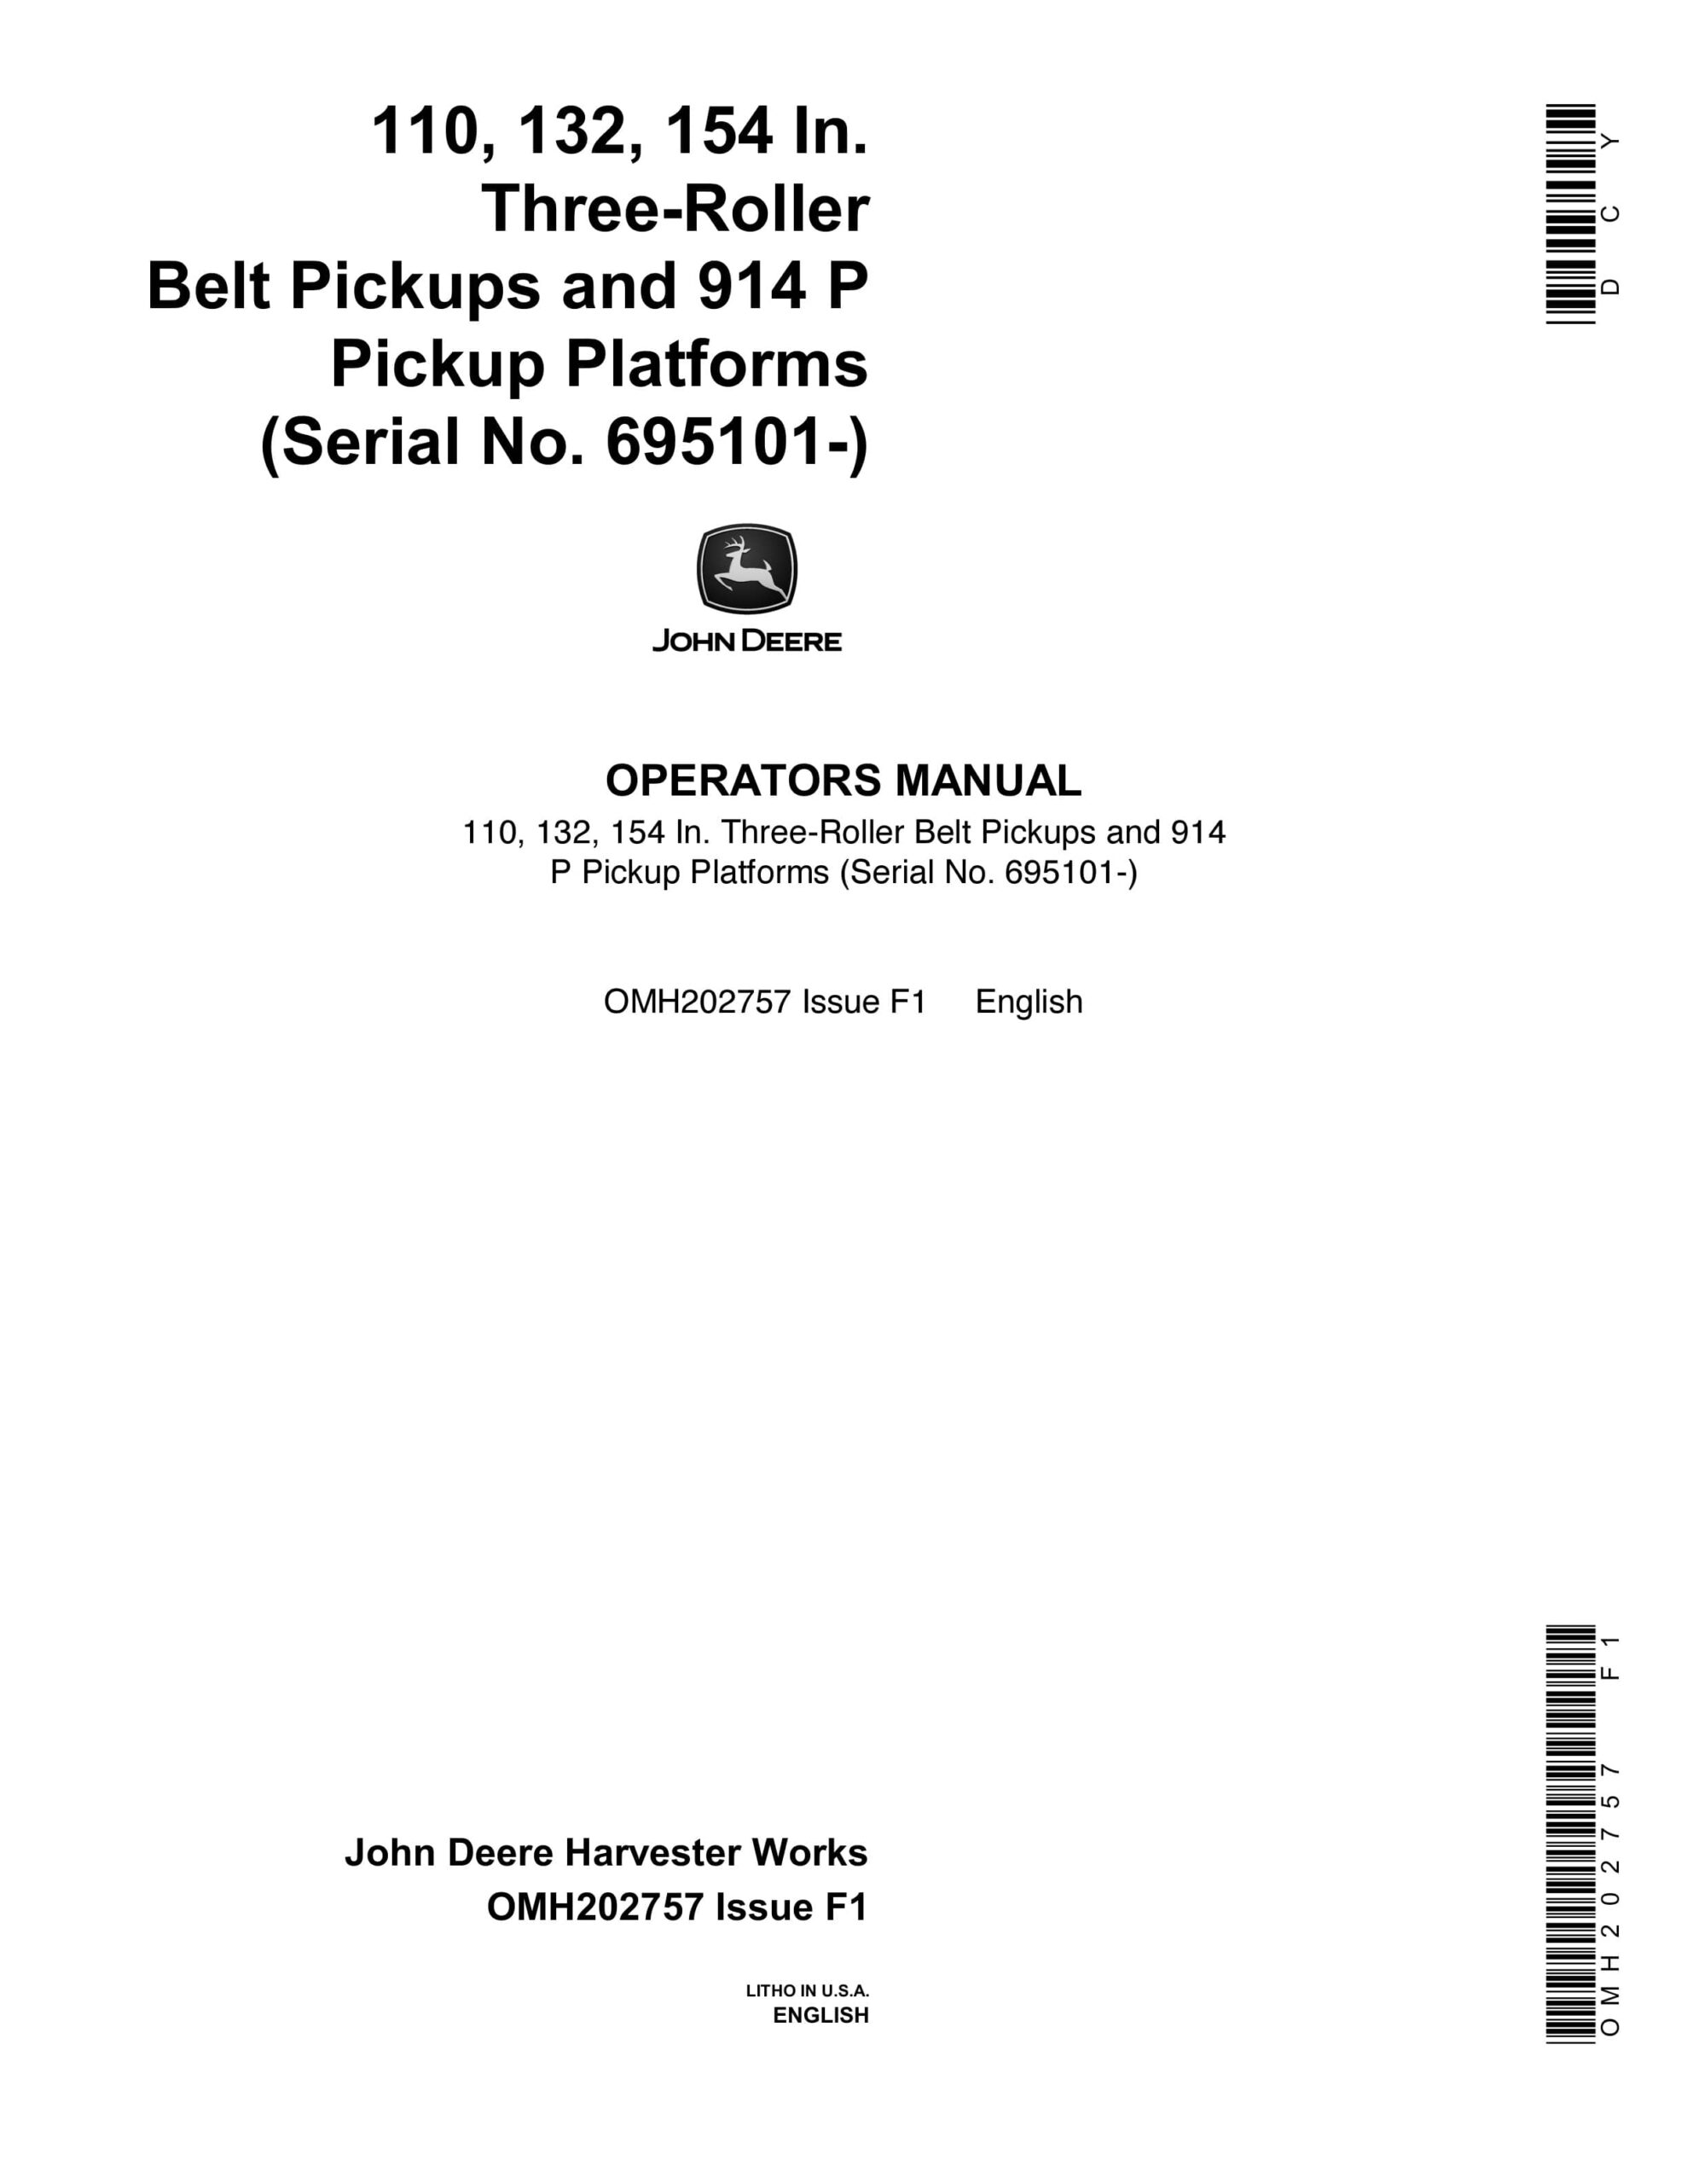 John Deere 110 132 154 In 3-Roller Belt Pickups and 914 P Pickup Platform Operator Manual OMH202757-1